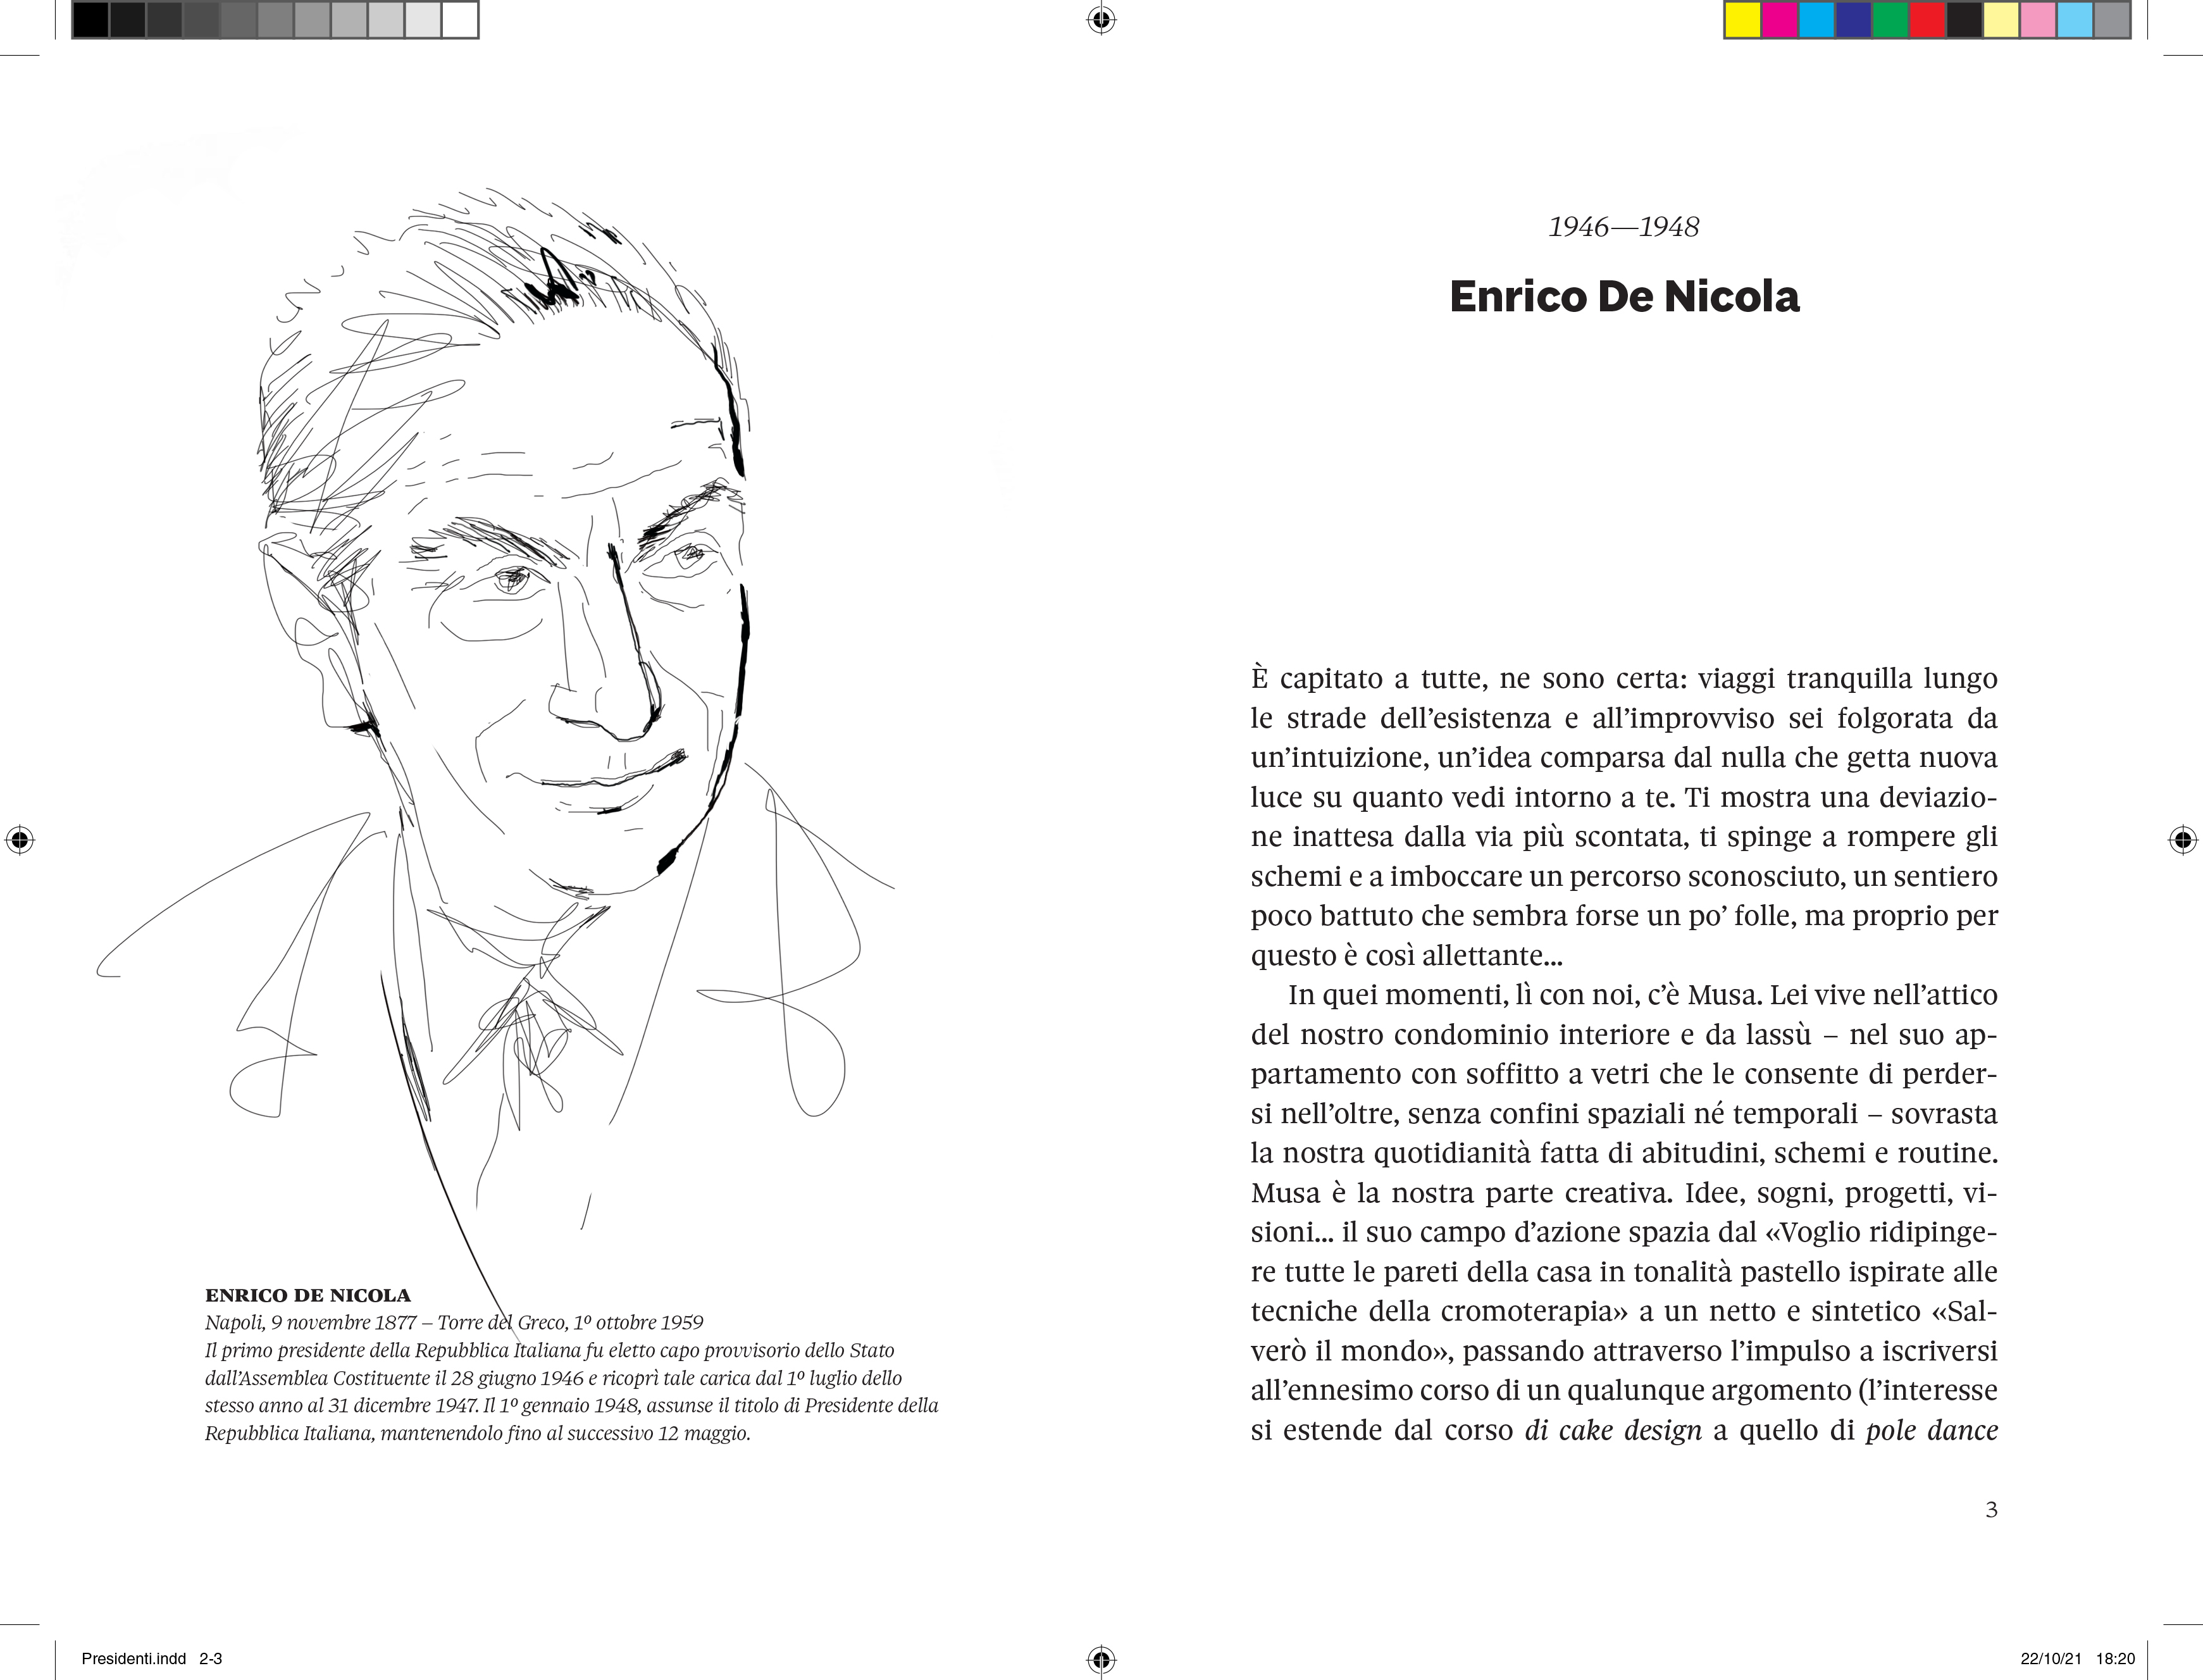 Presidenti, ink illustration portrait, Italy